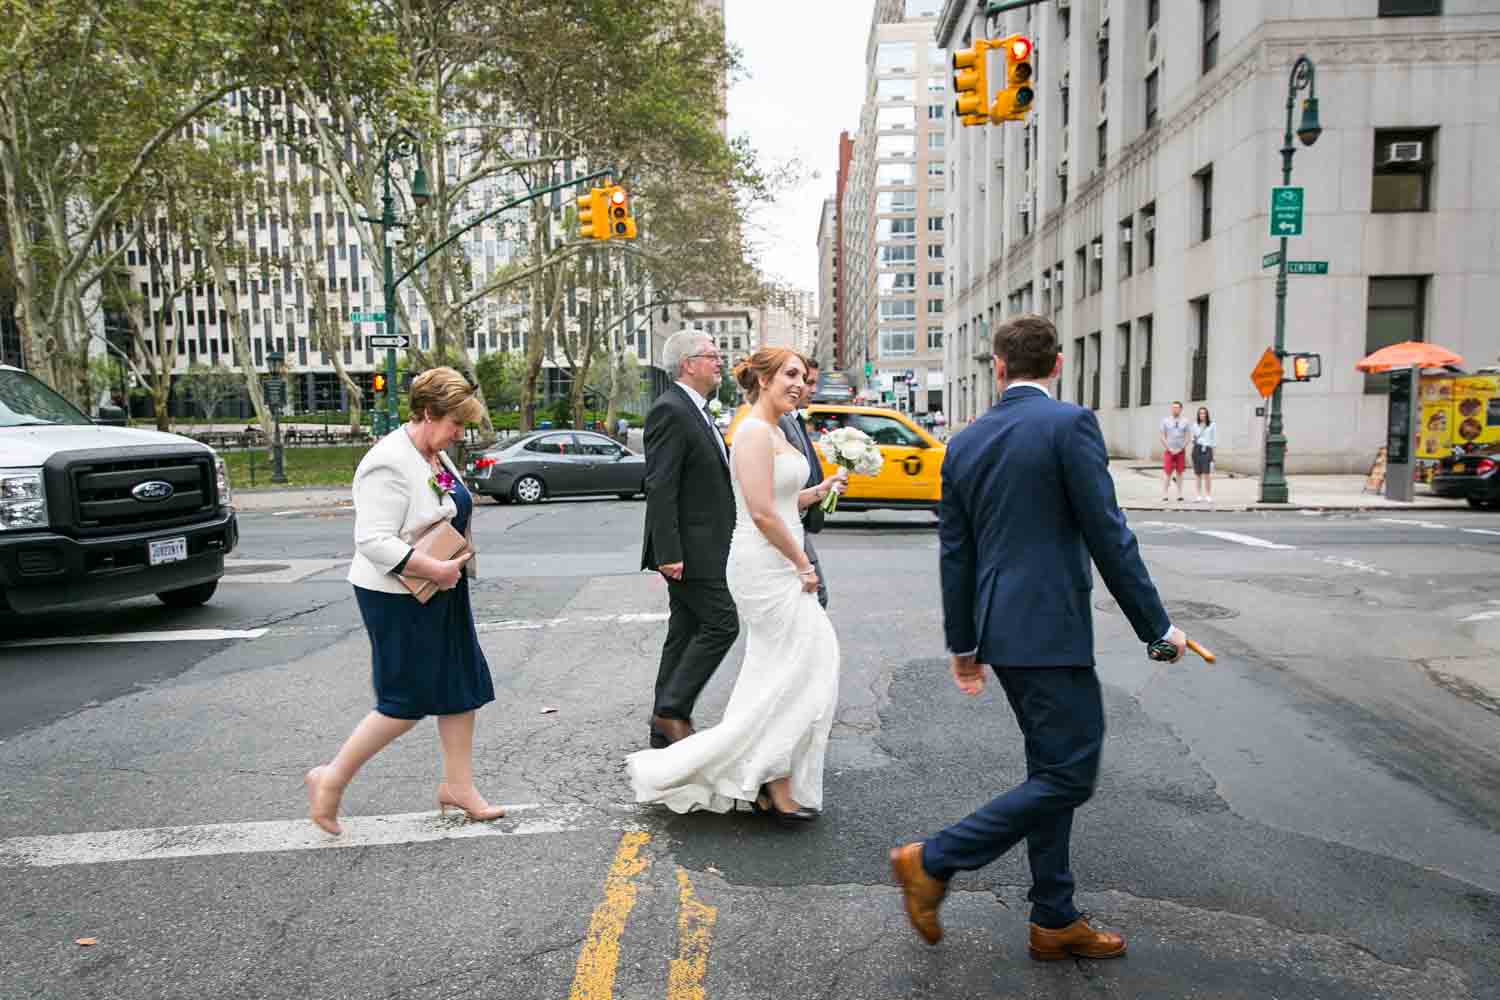 Bridal party walking across NYC street